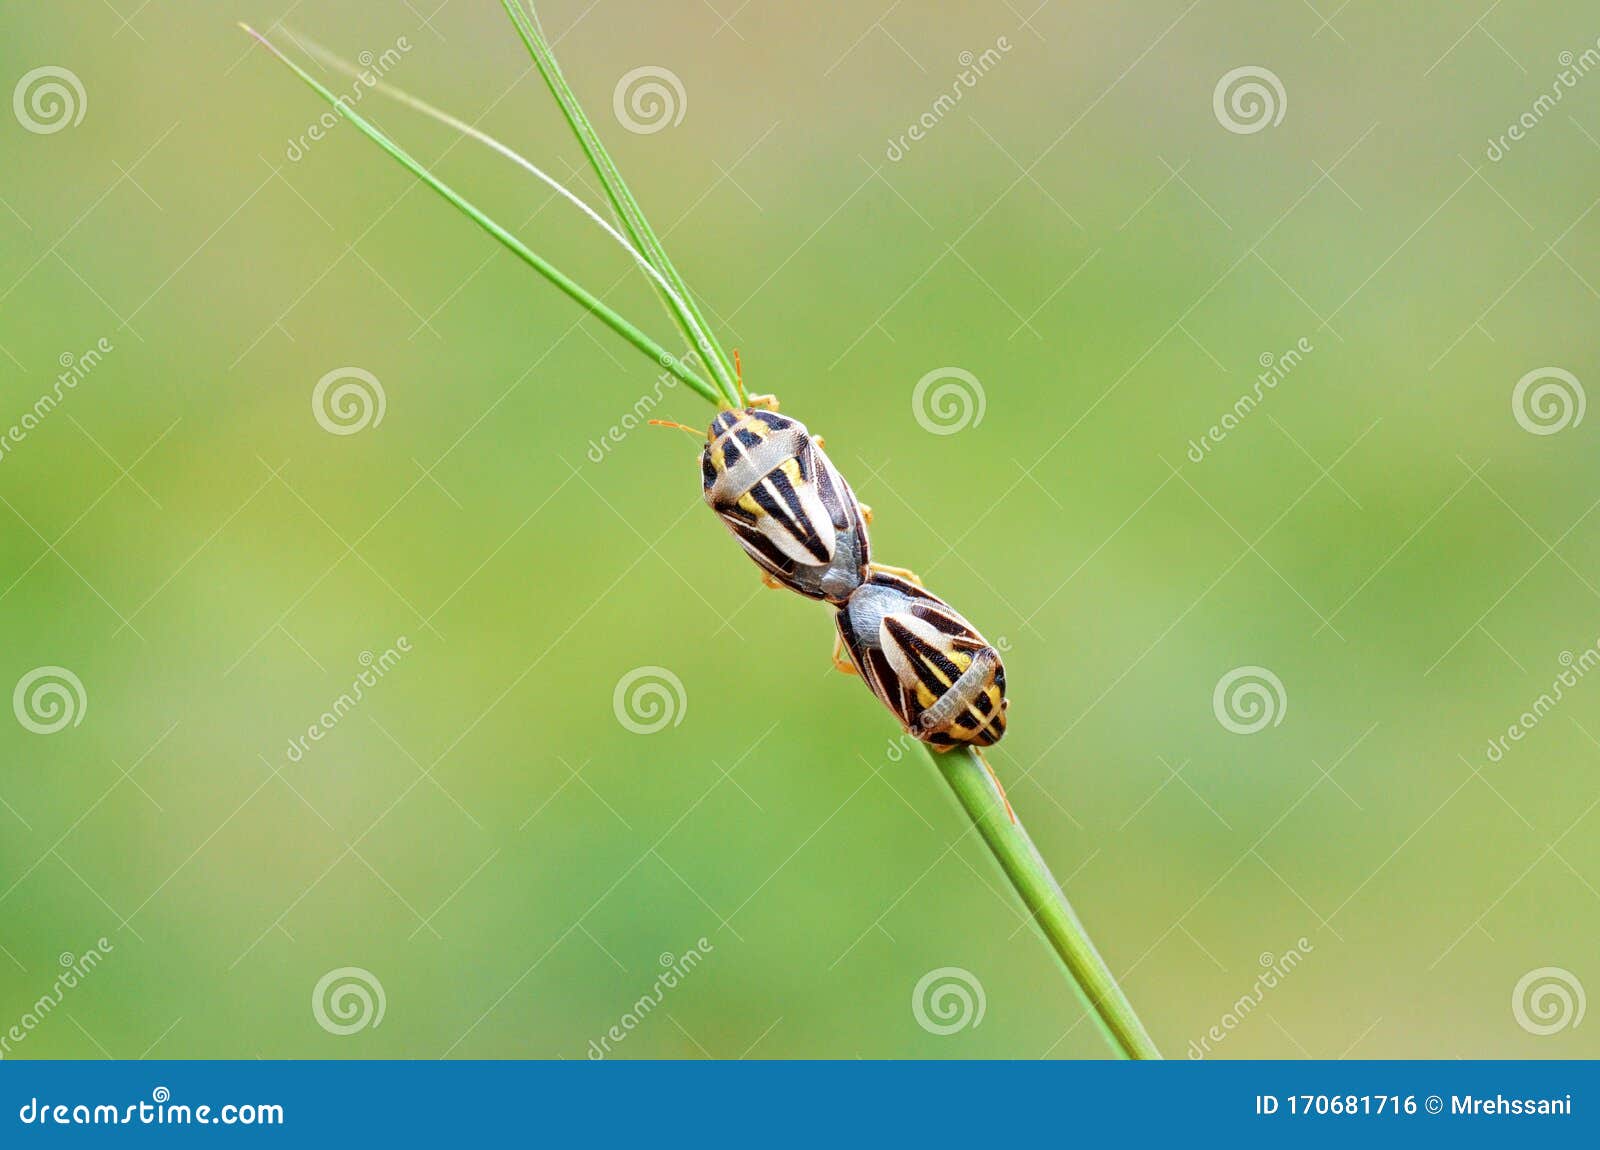 two pentatomidae shield bug or stink bug mating , hemiptera insect